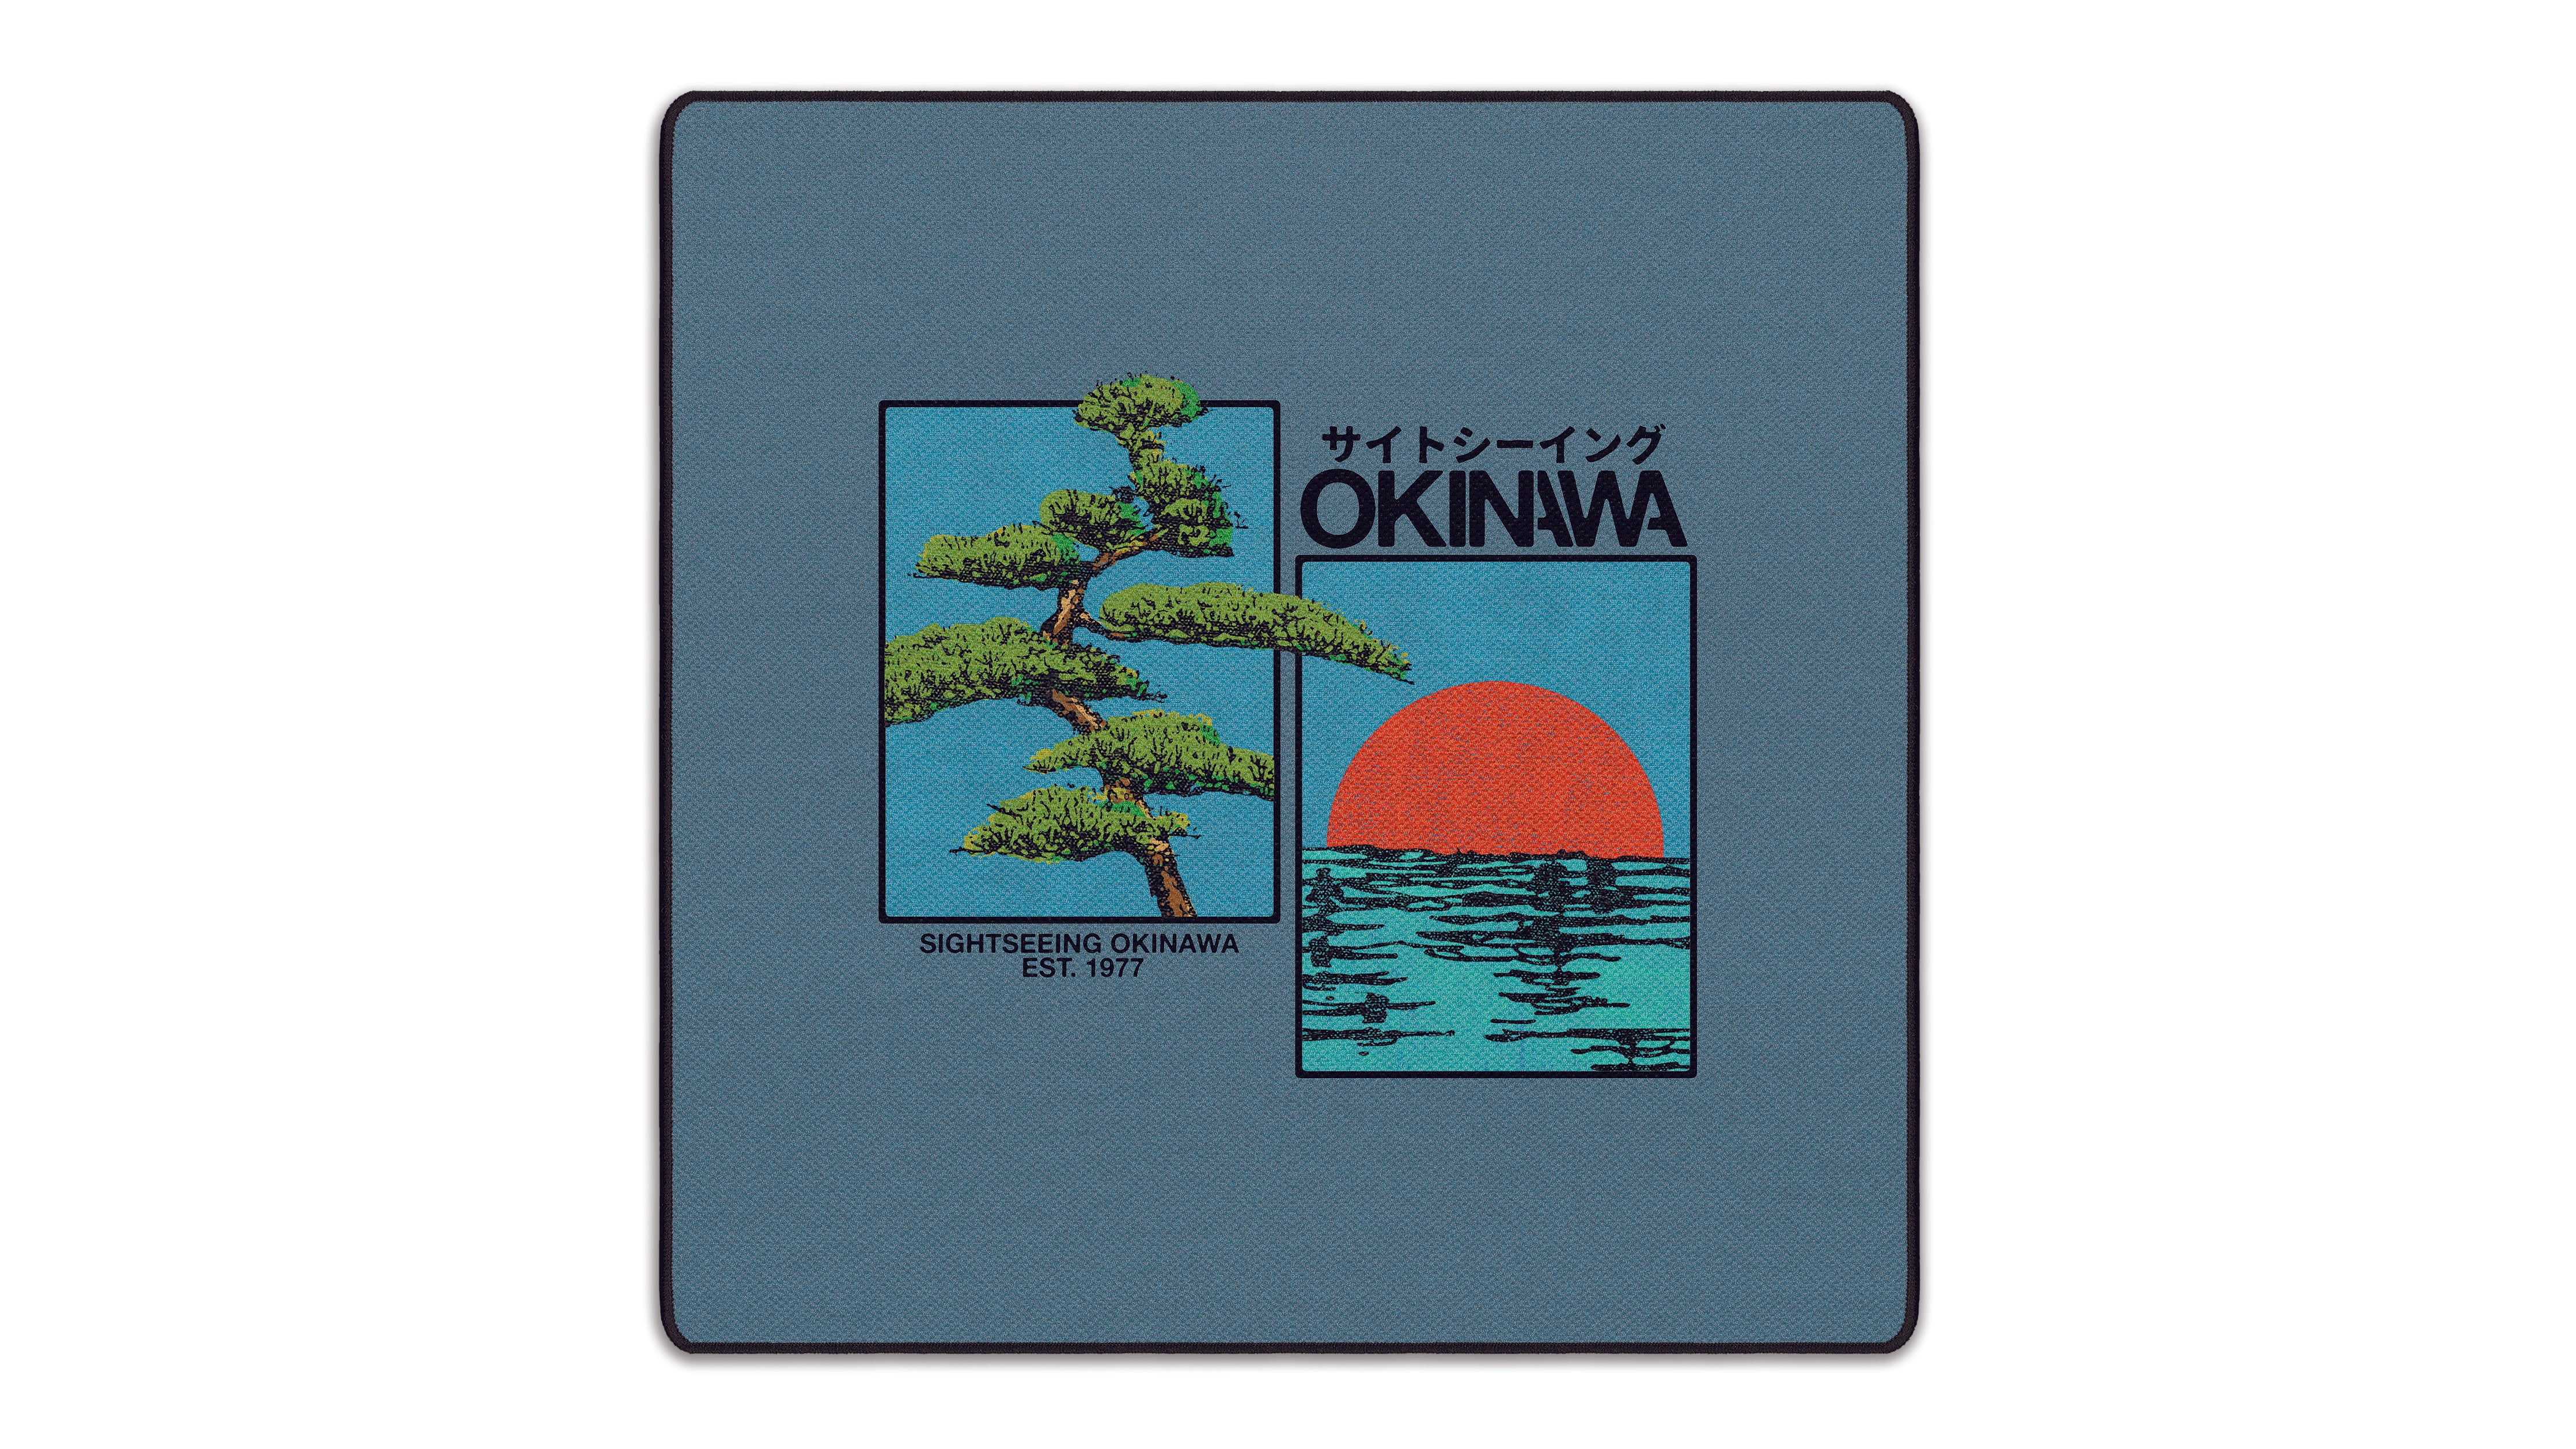 Okinawa by OZGMX - The Mousepad Company